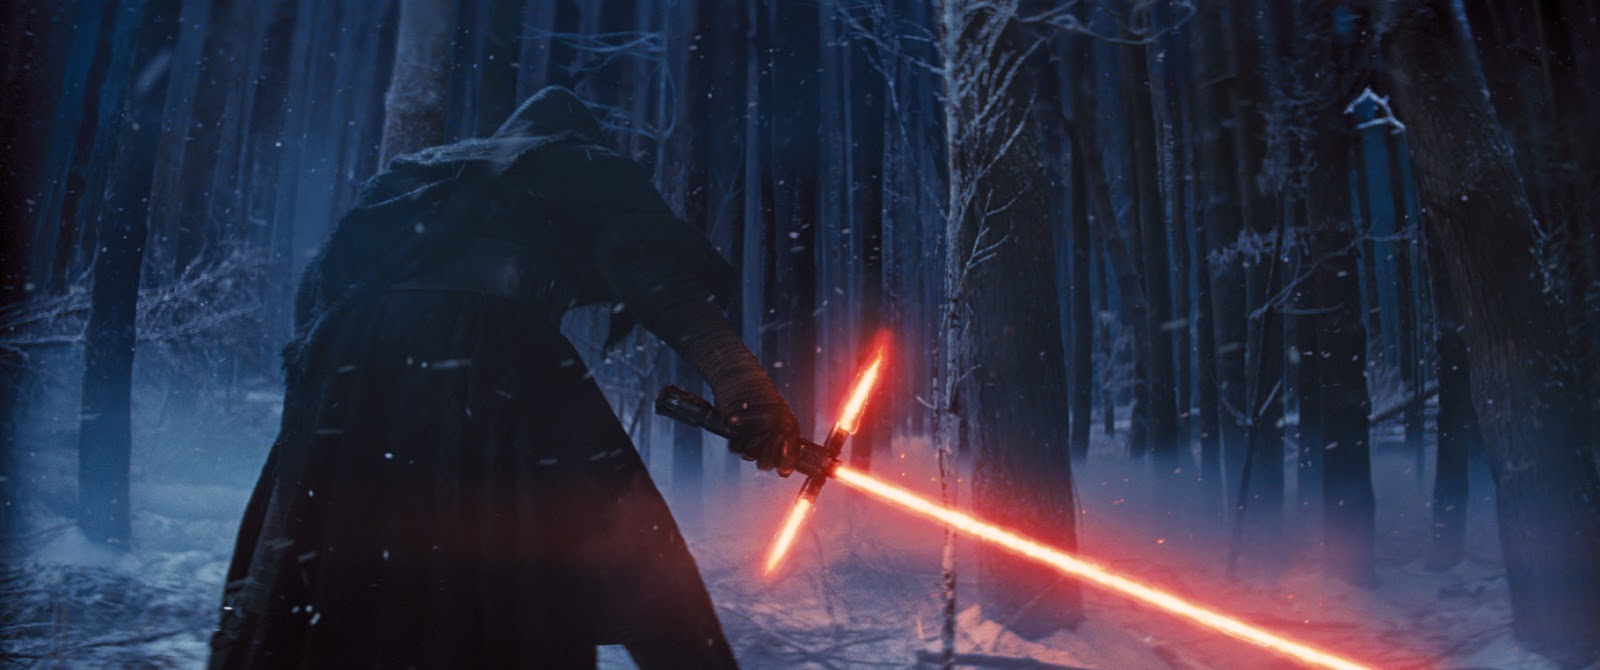 the force awakens trailer